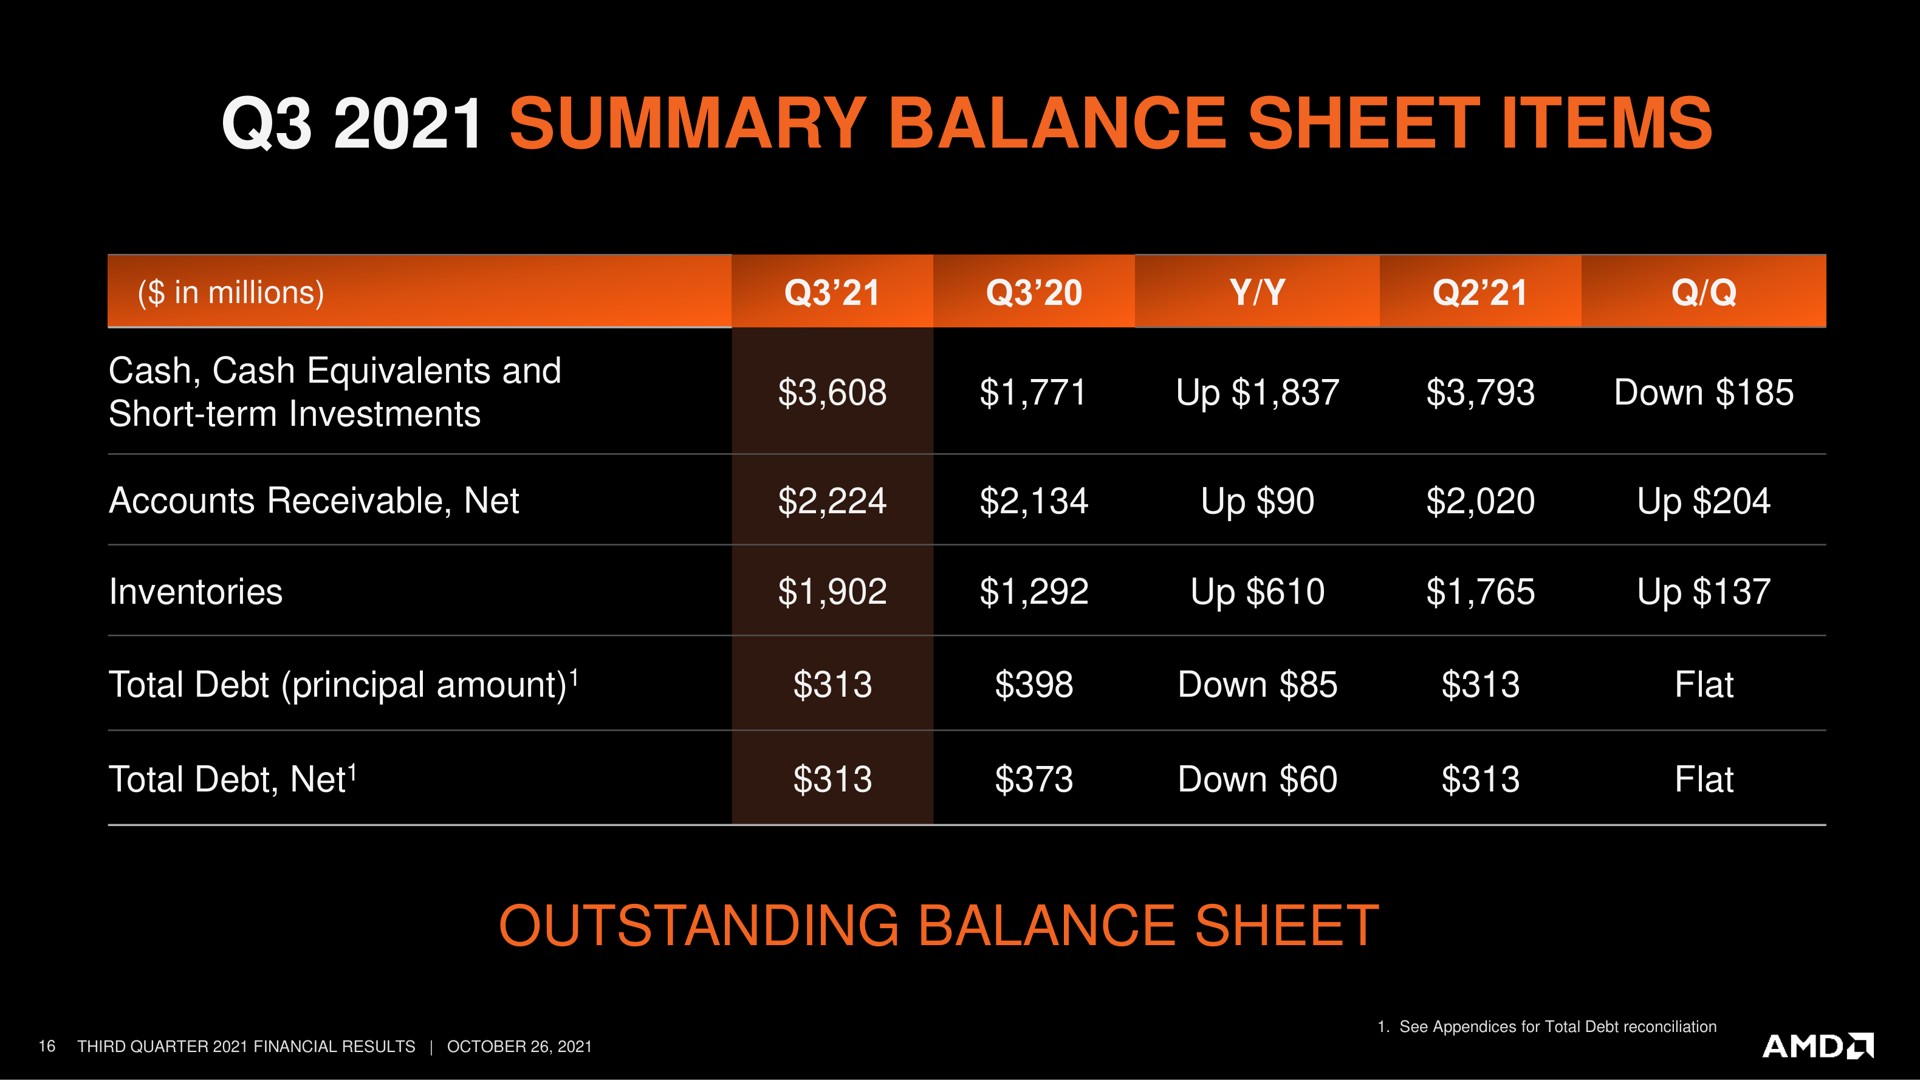 summary balance sheet items outstanding balance sheet | AMD